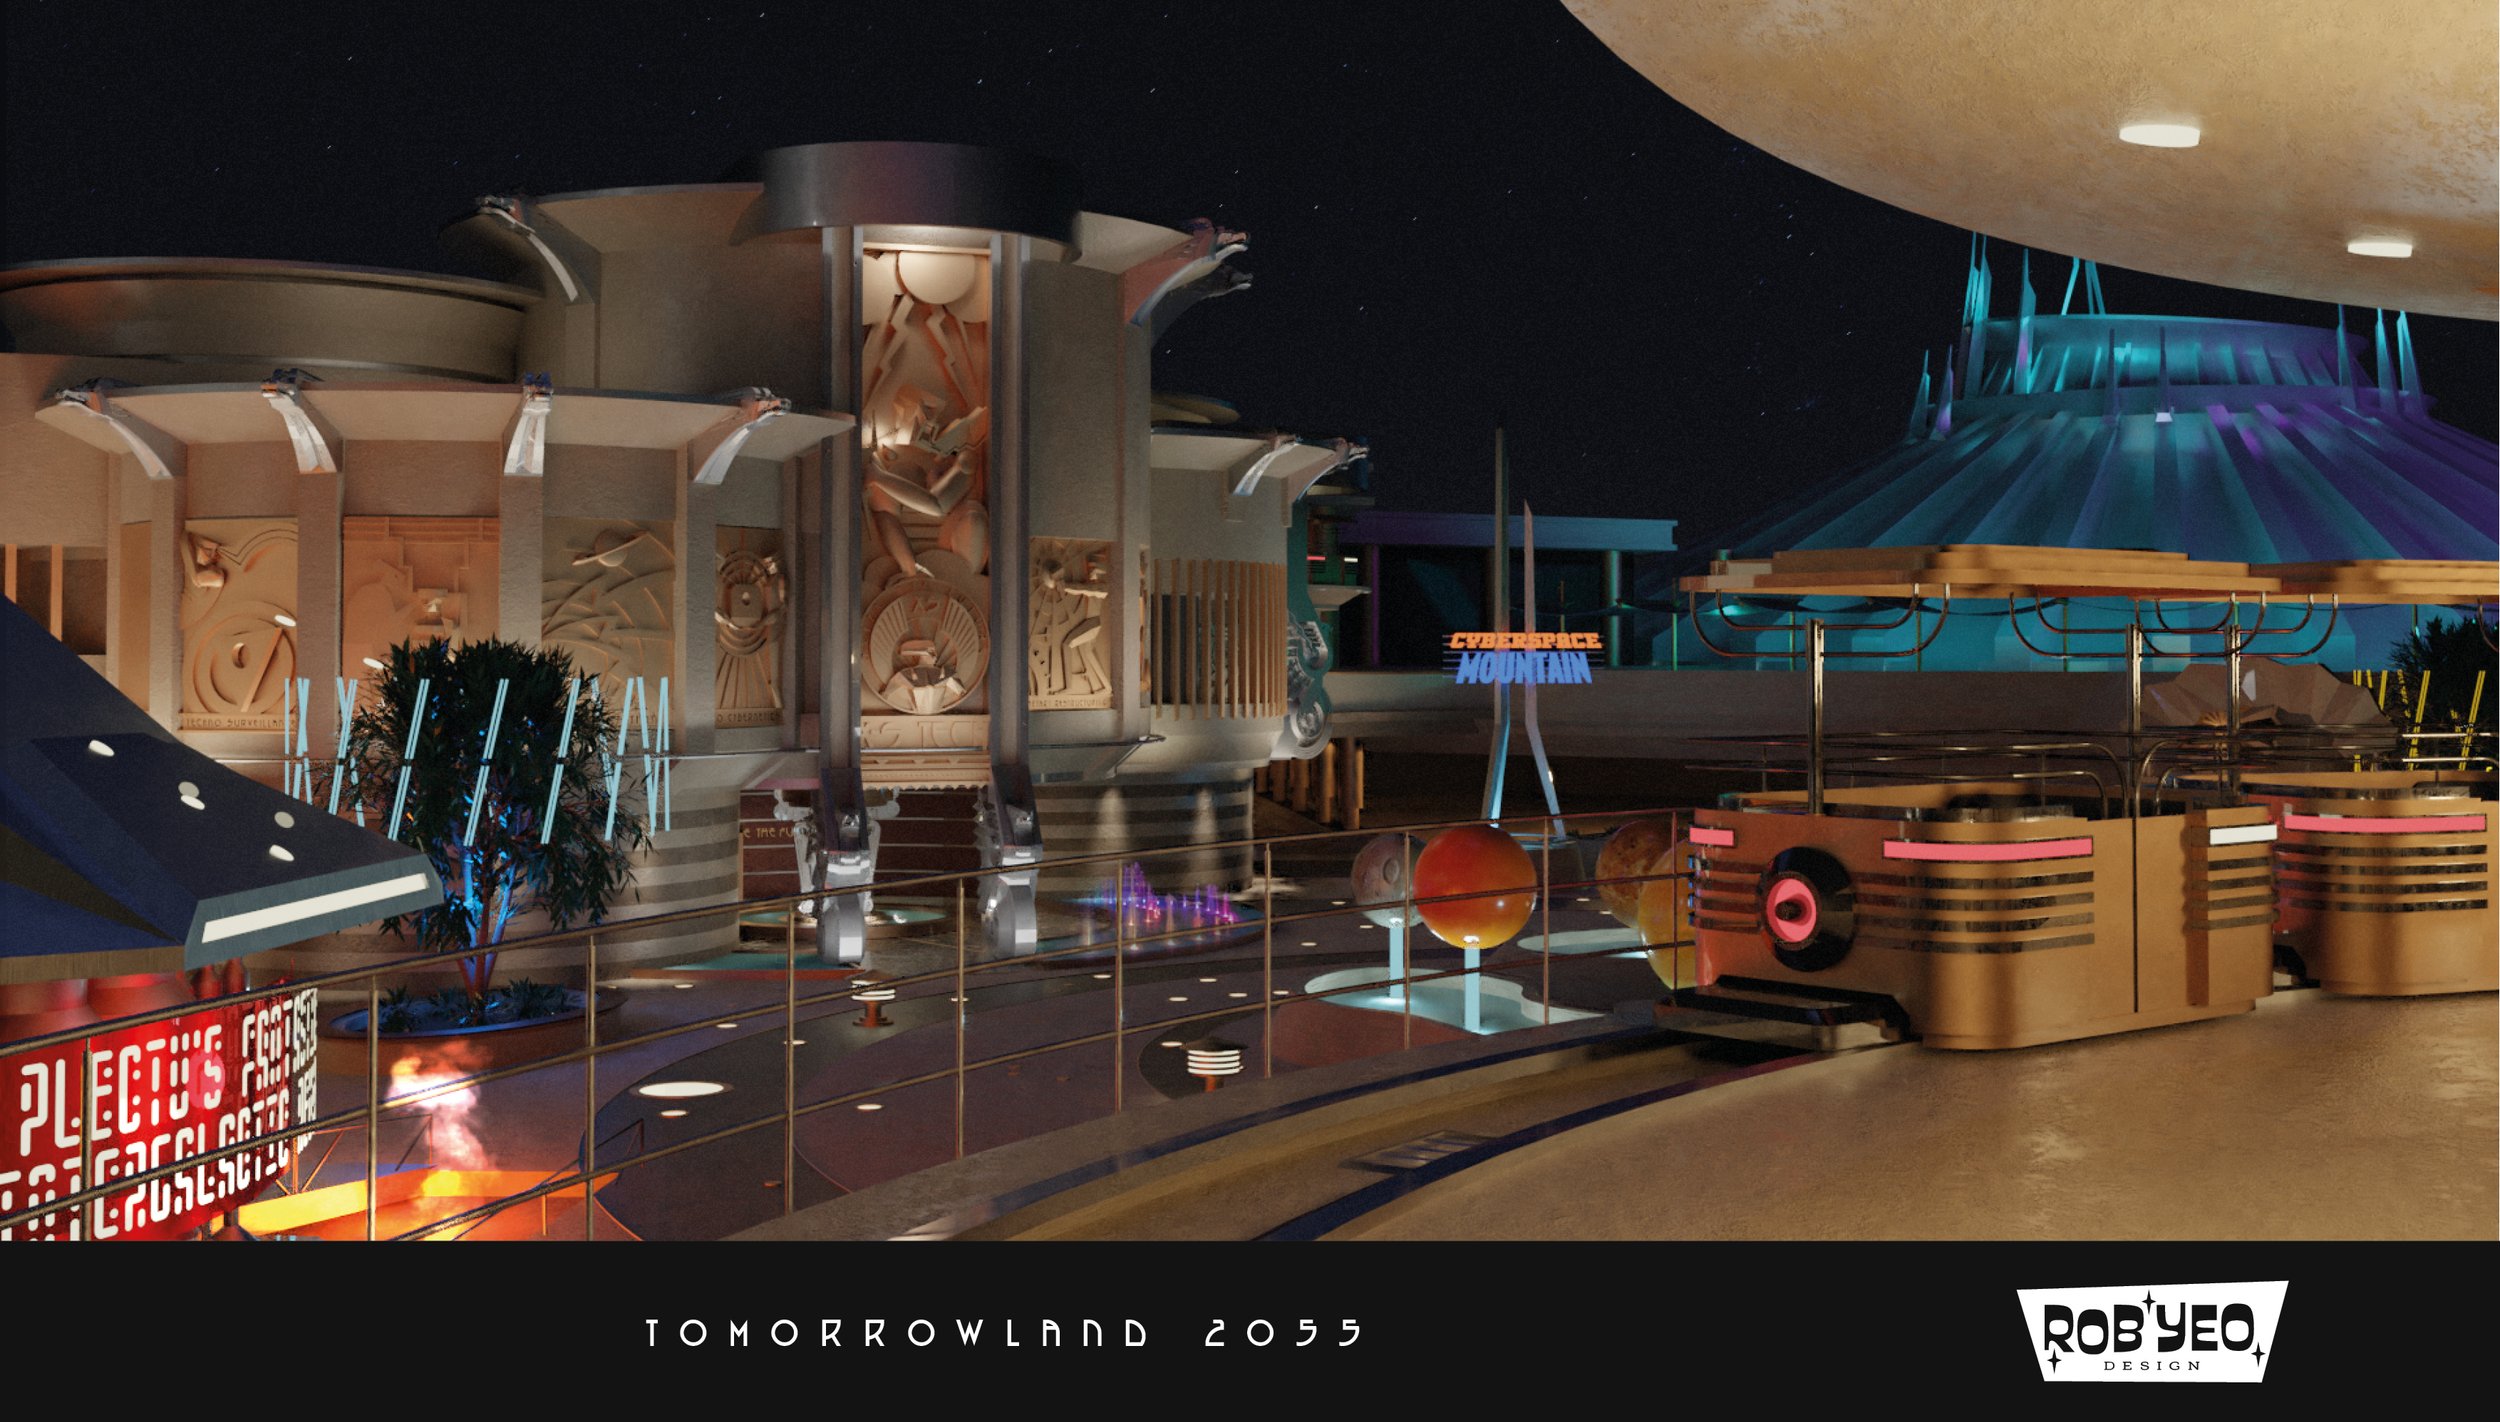 Tomorrowland 2055